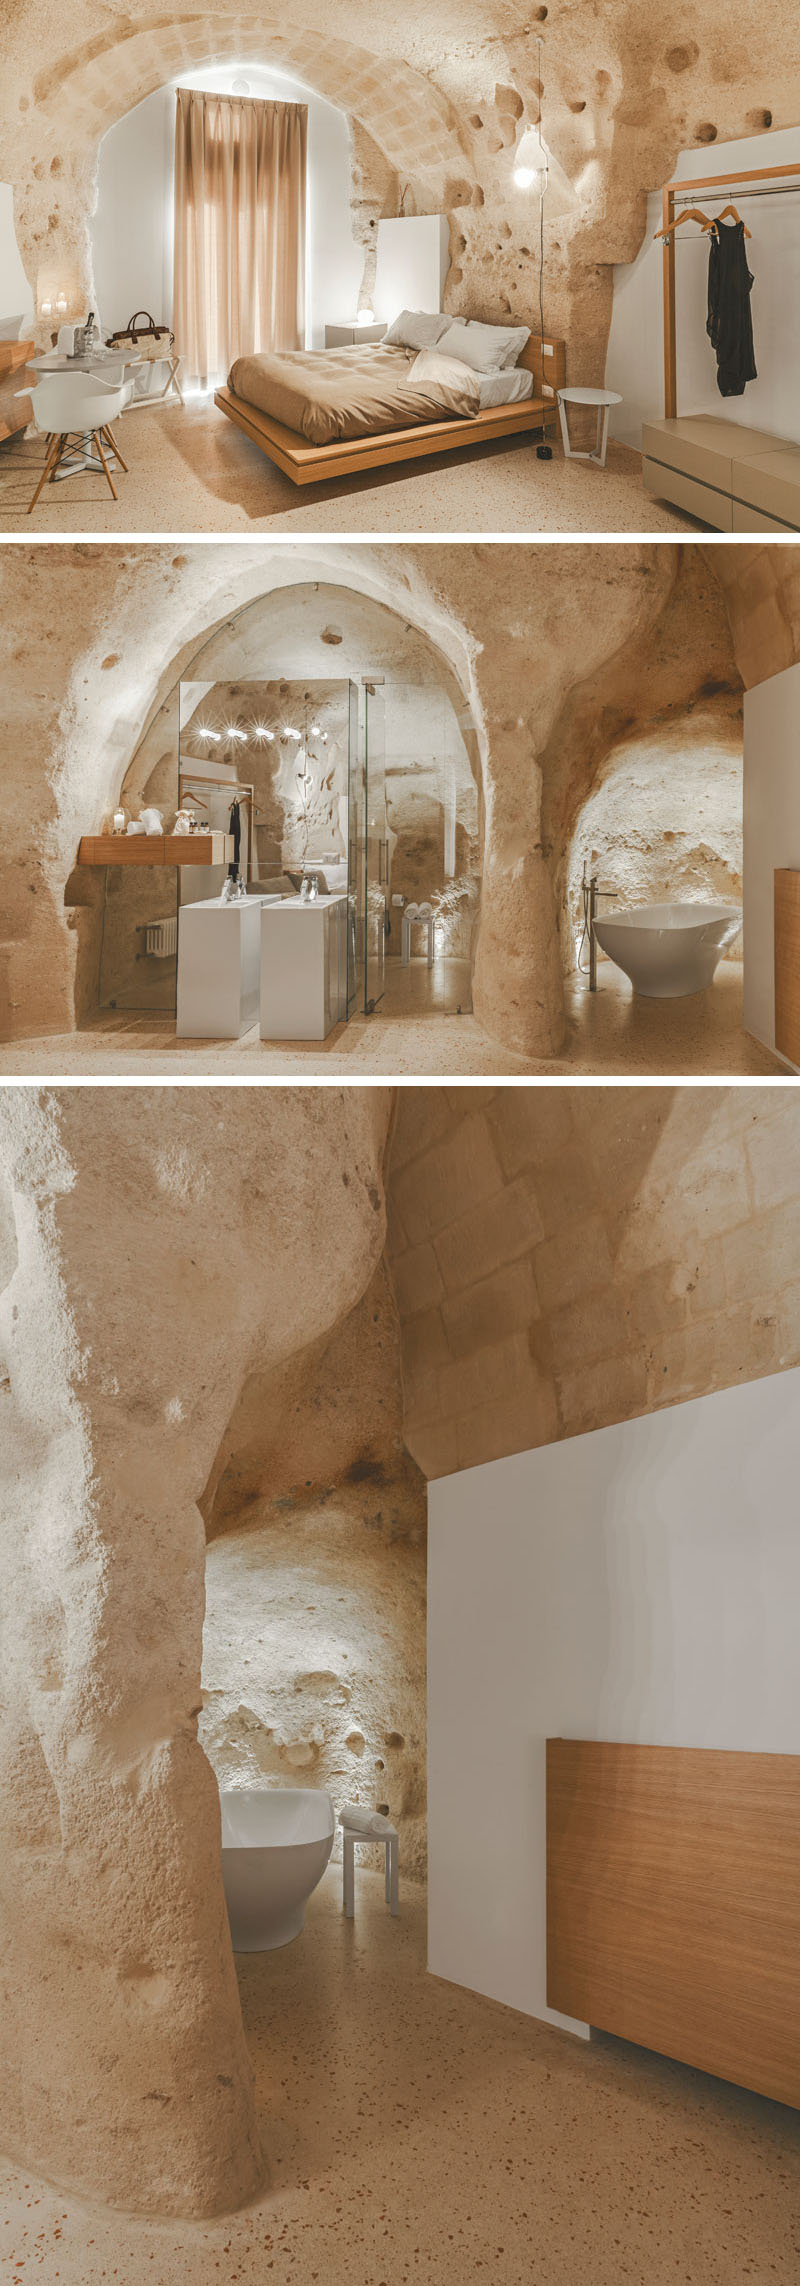 Apartamente de lux amenajate in vechile caverne - Apartamente de lux amenajate in vechile caverne 